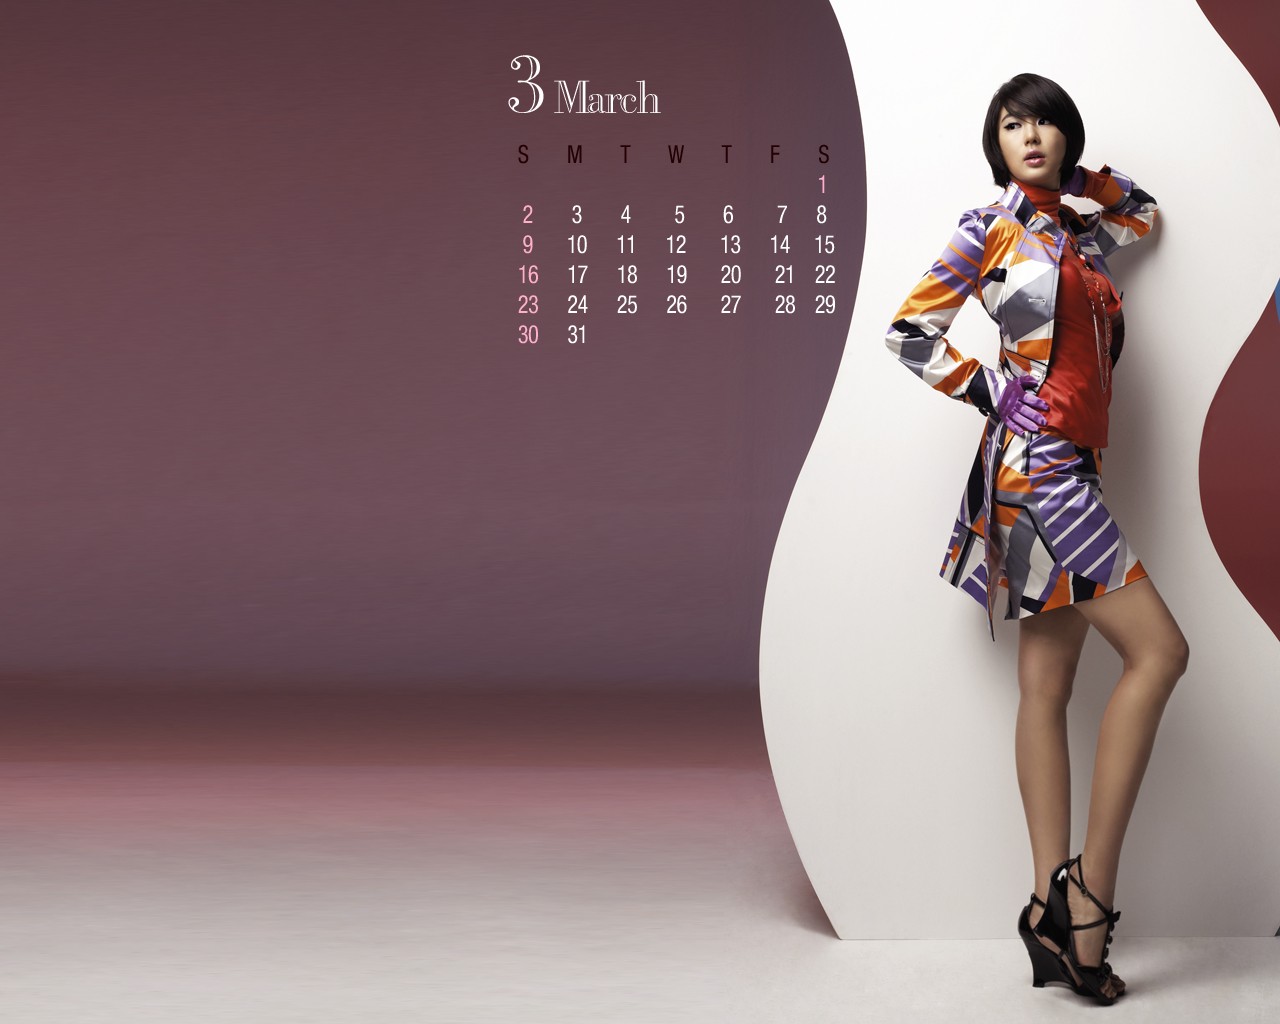 Corea del Sur Joinus Fondos de Belleza Moda #2 - 1280x1024